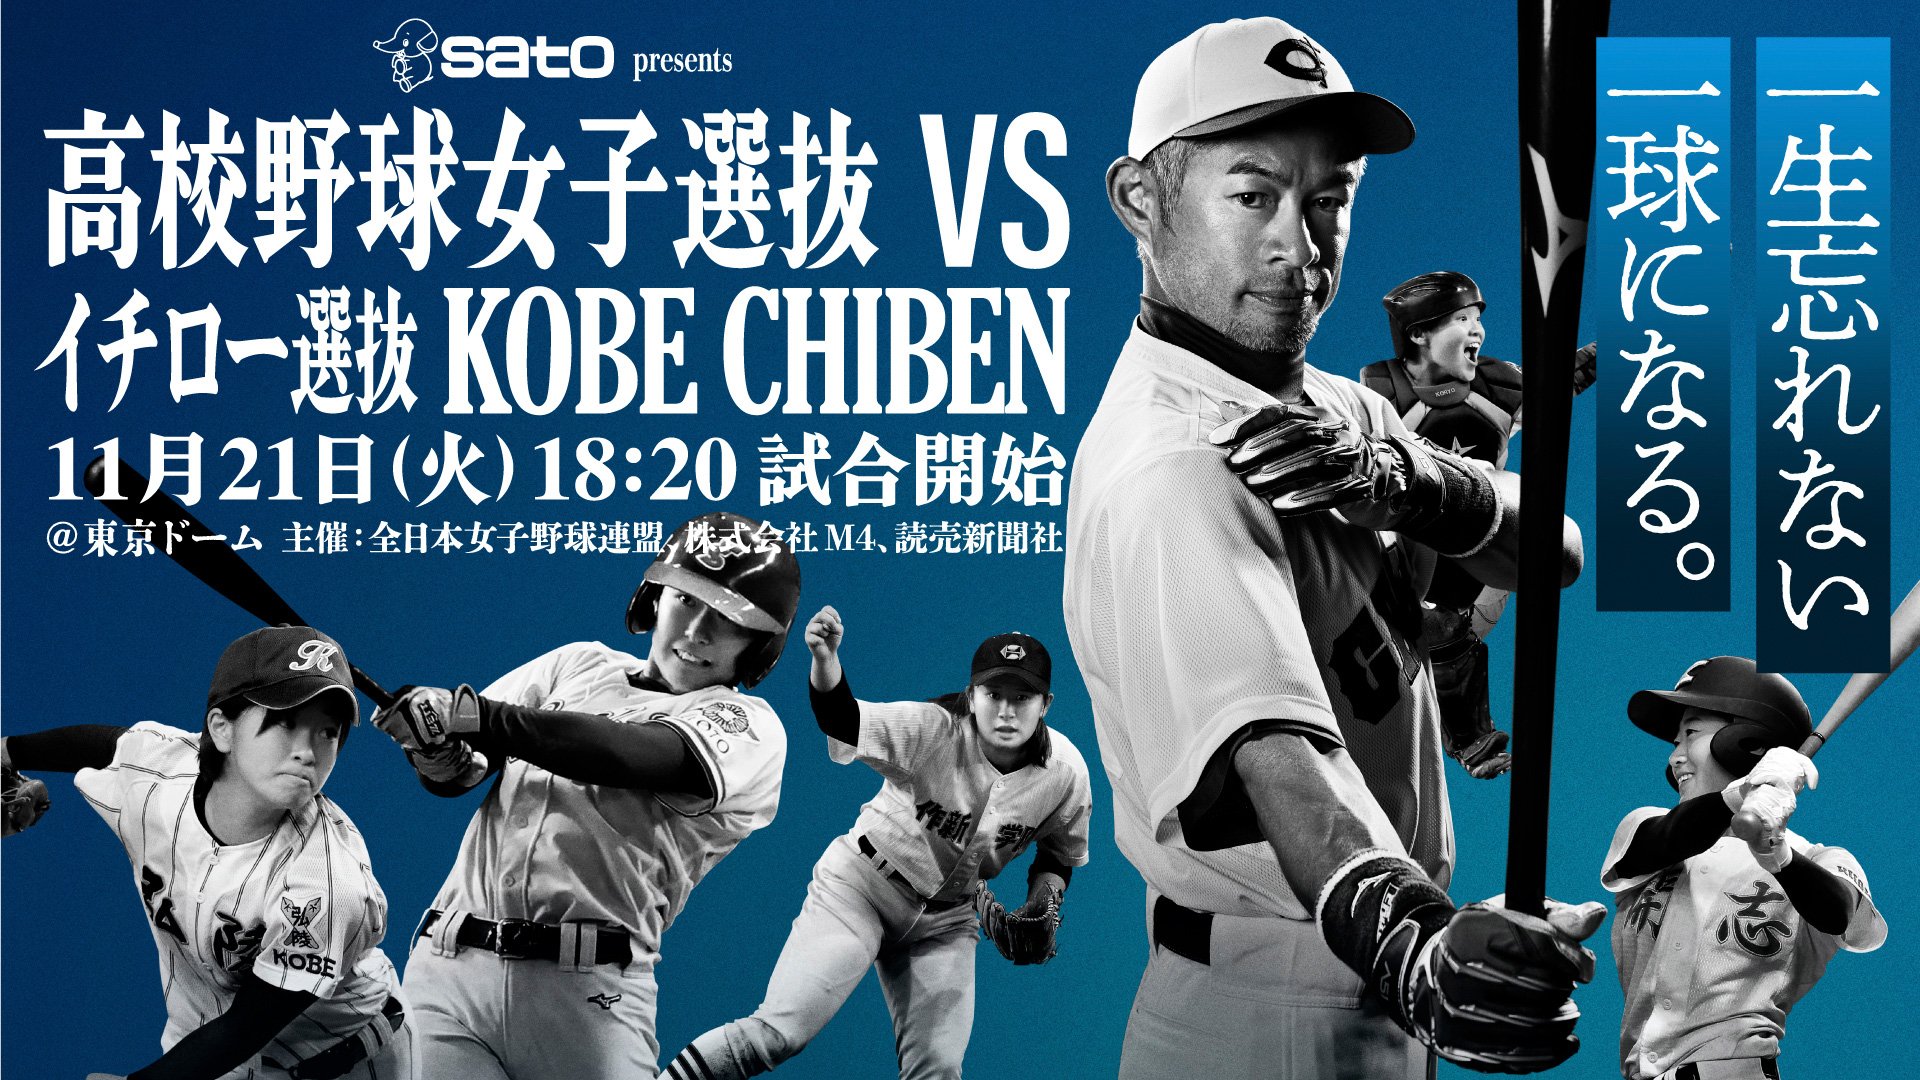 高校野球女子選抜vsイチロー選抜 KOBE CHIBEN